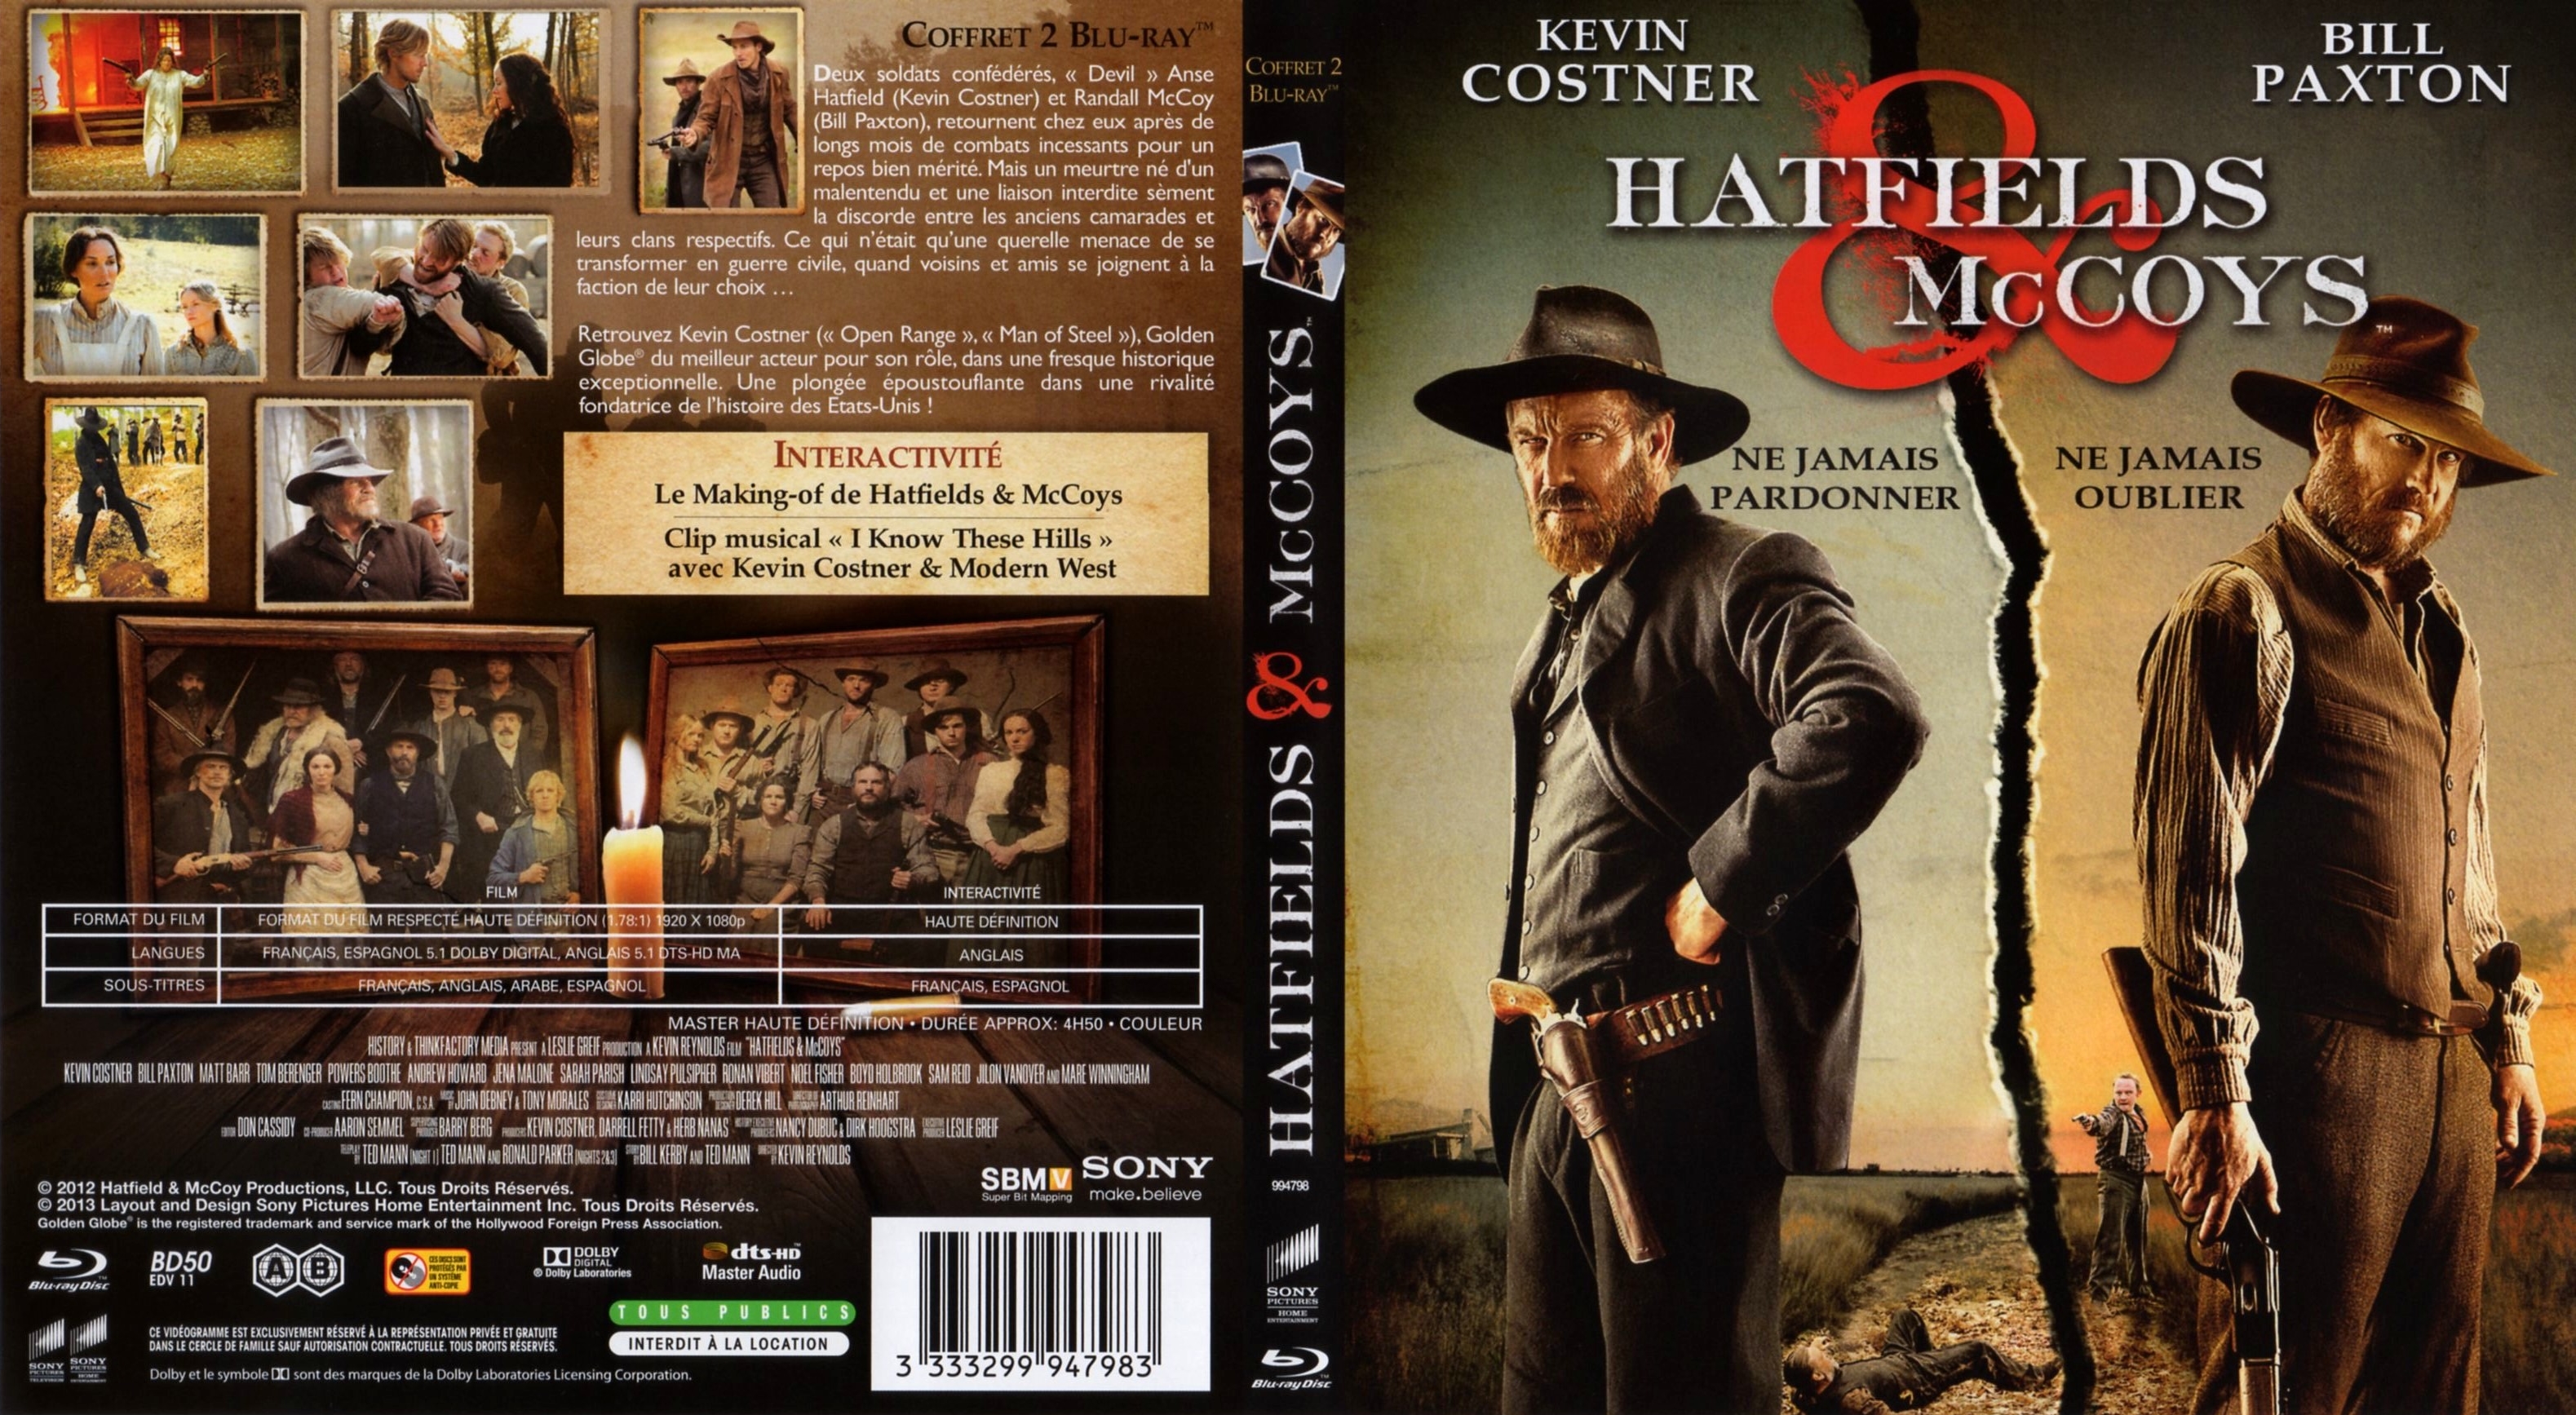 Jaquette DVD Hatfields & McCoys (BLU-RAY)